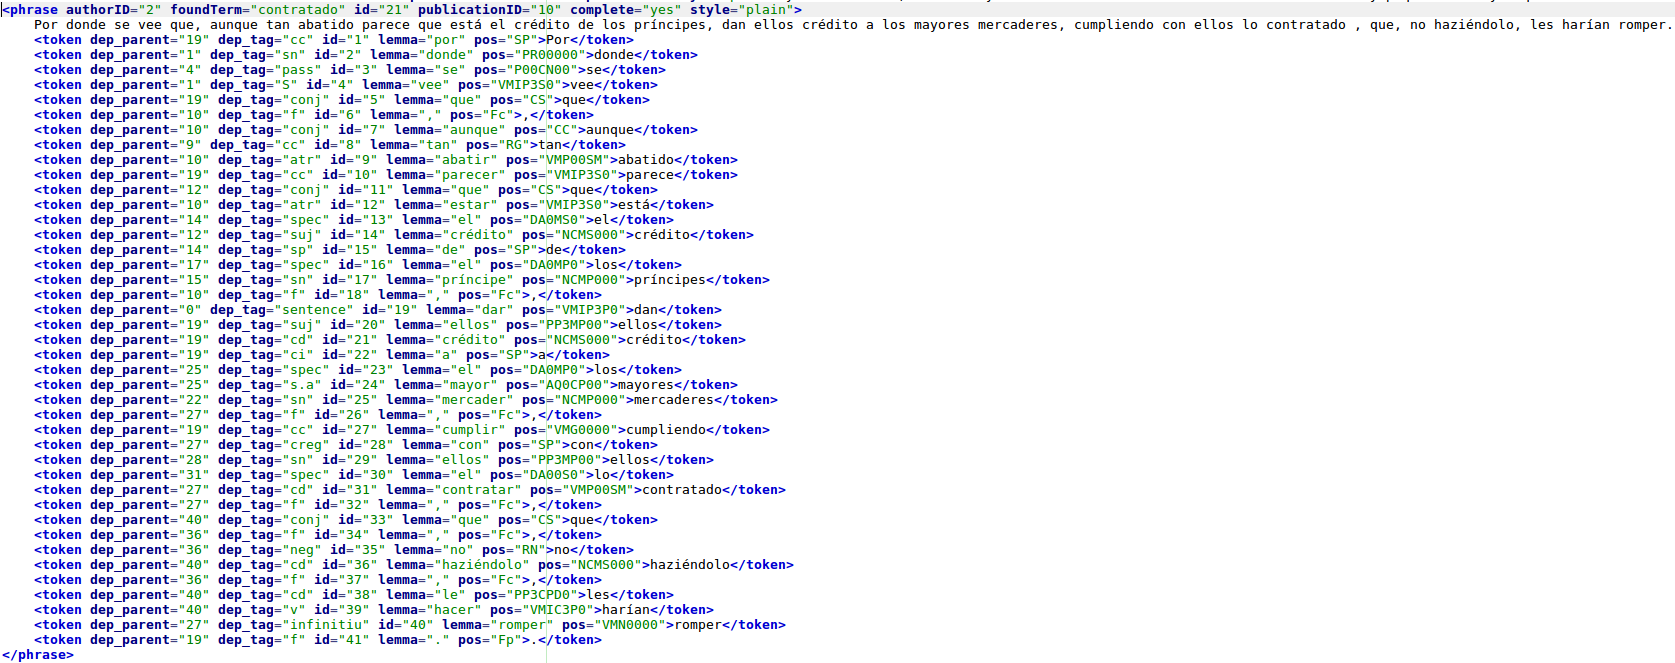 Screenshot XML